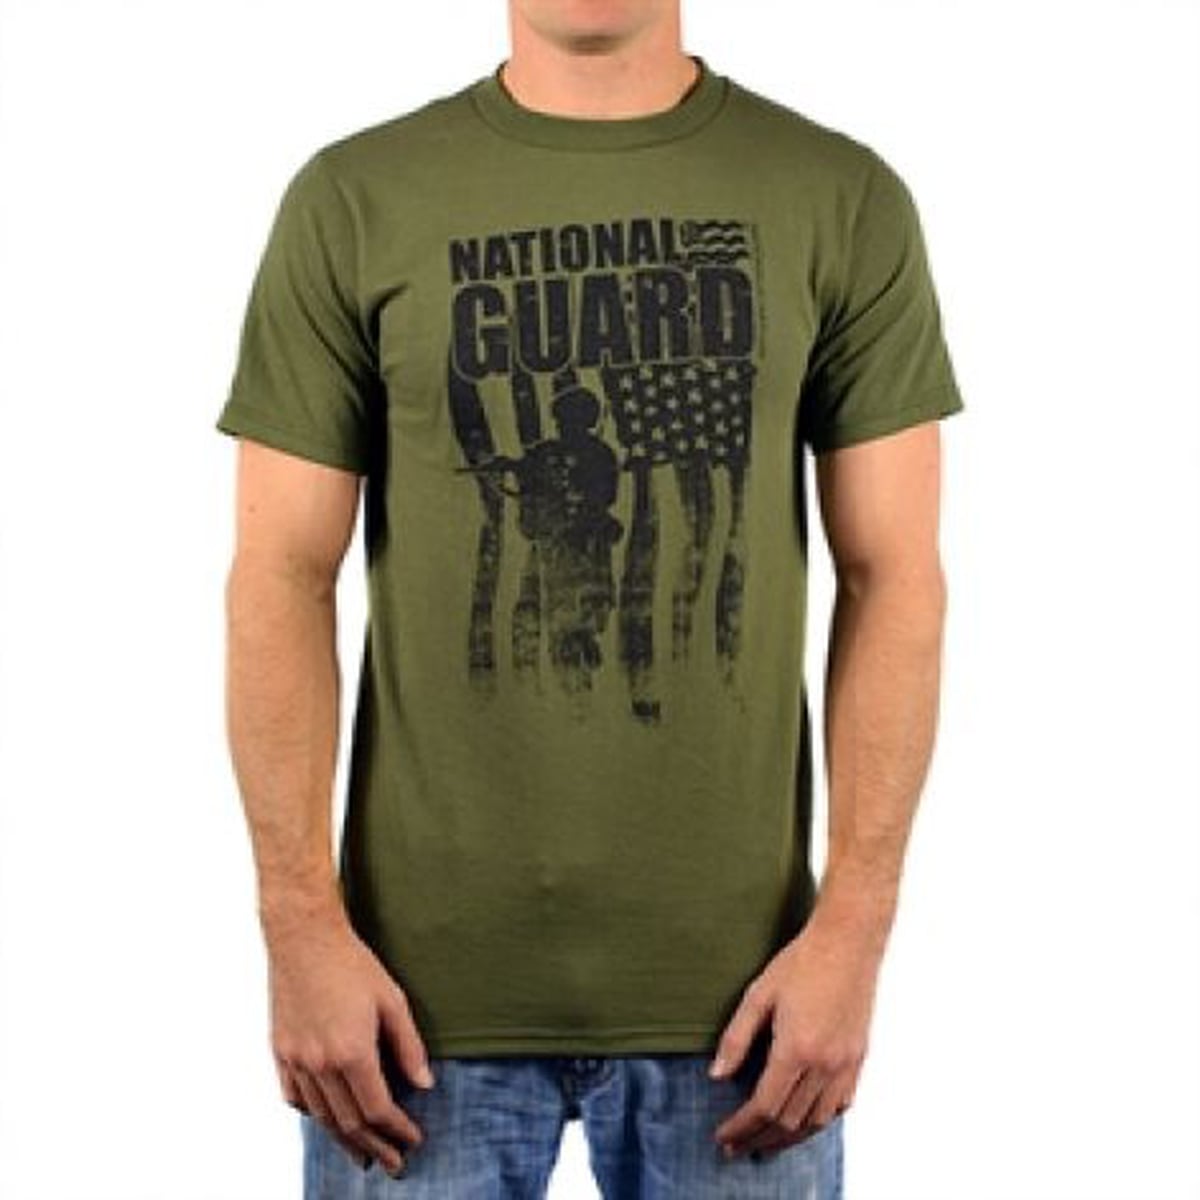 School: National Guard T-shirt violates dress code